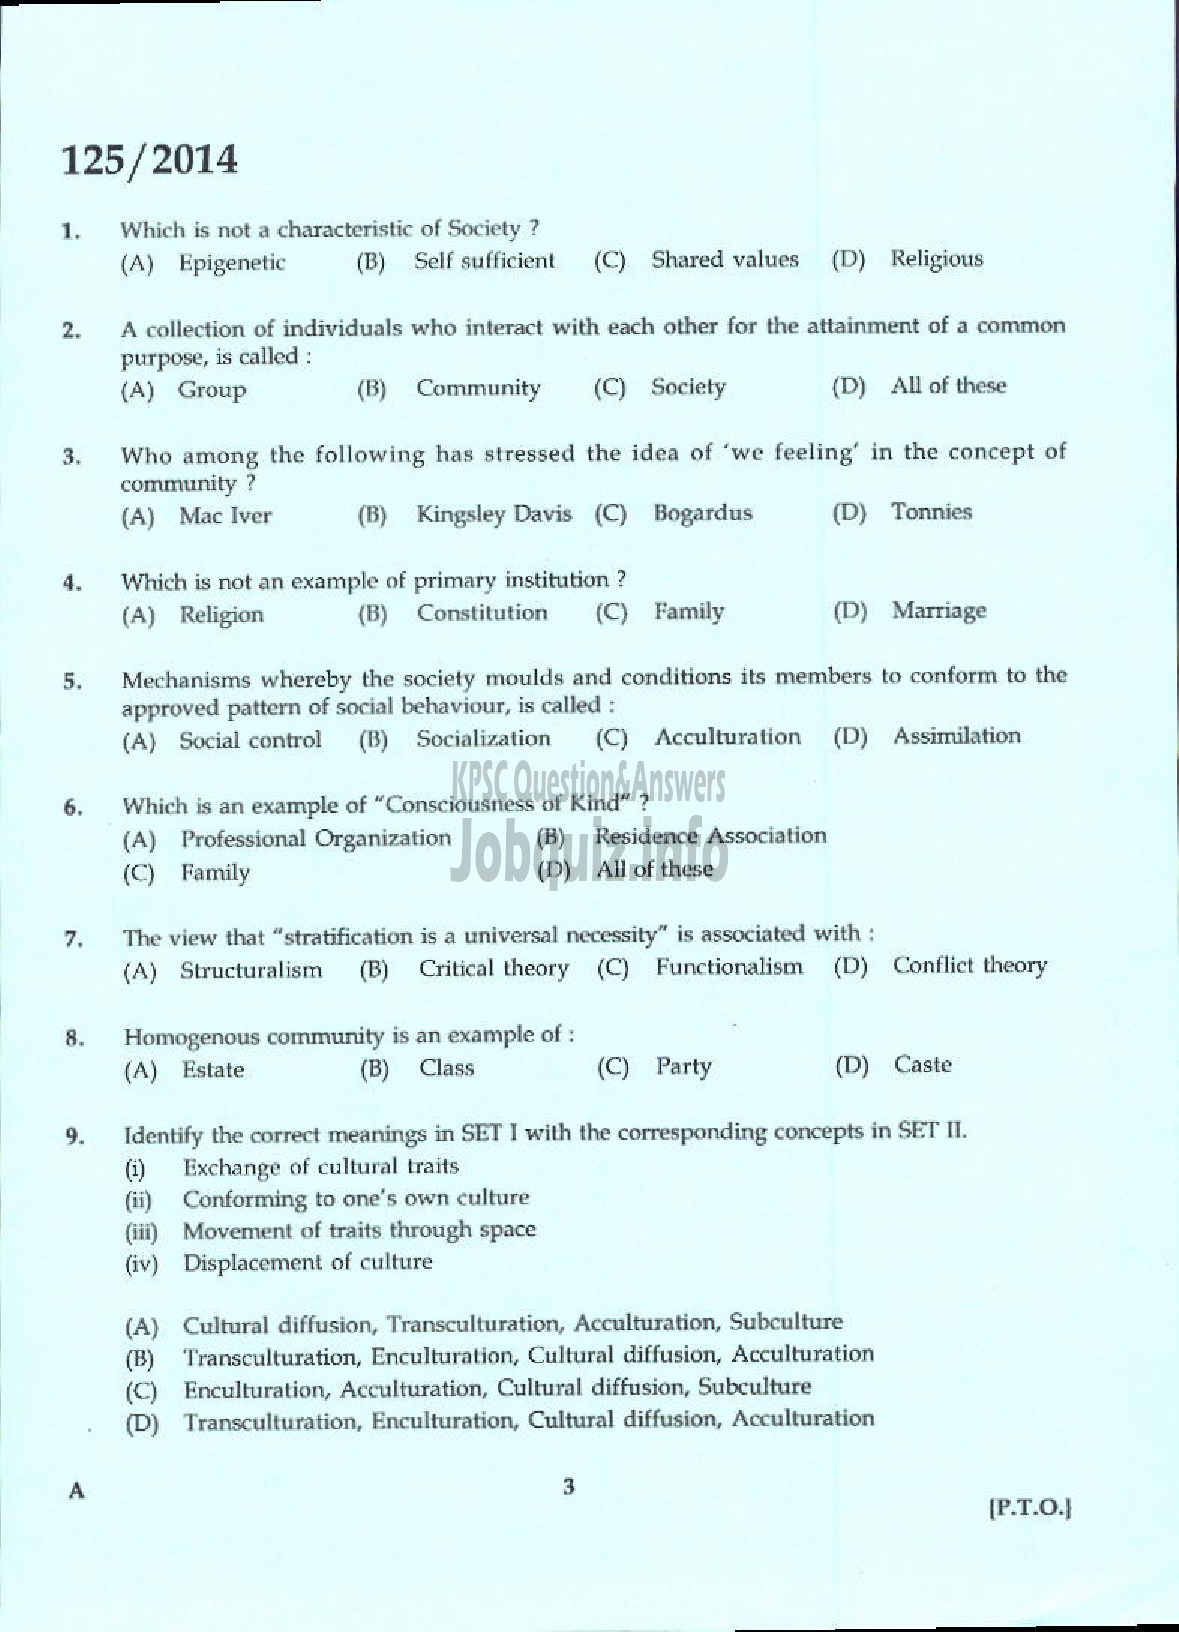 Kerala PSC Question Paper - LECTURER IN SOCIOLOGY KERALA COLLEGIATE EDUCATION-1